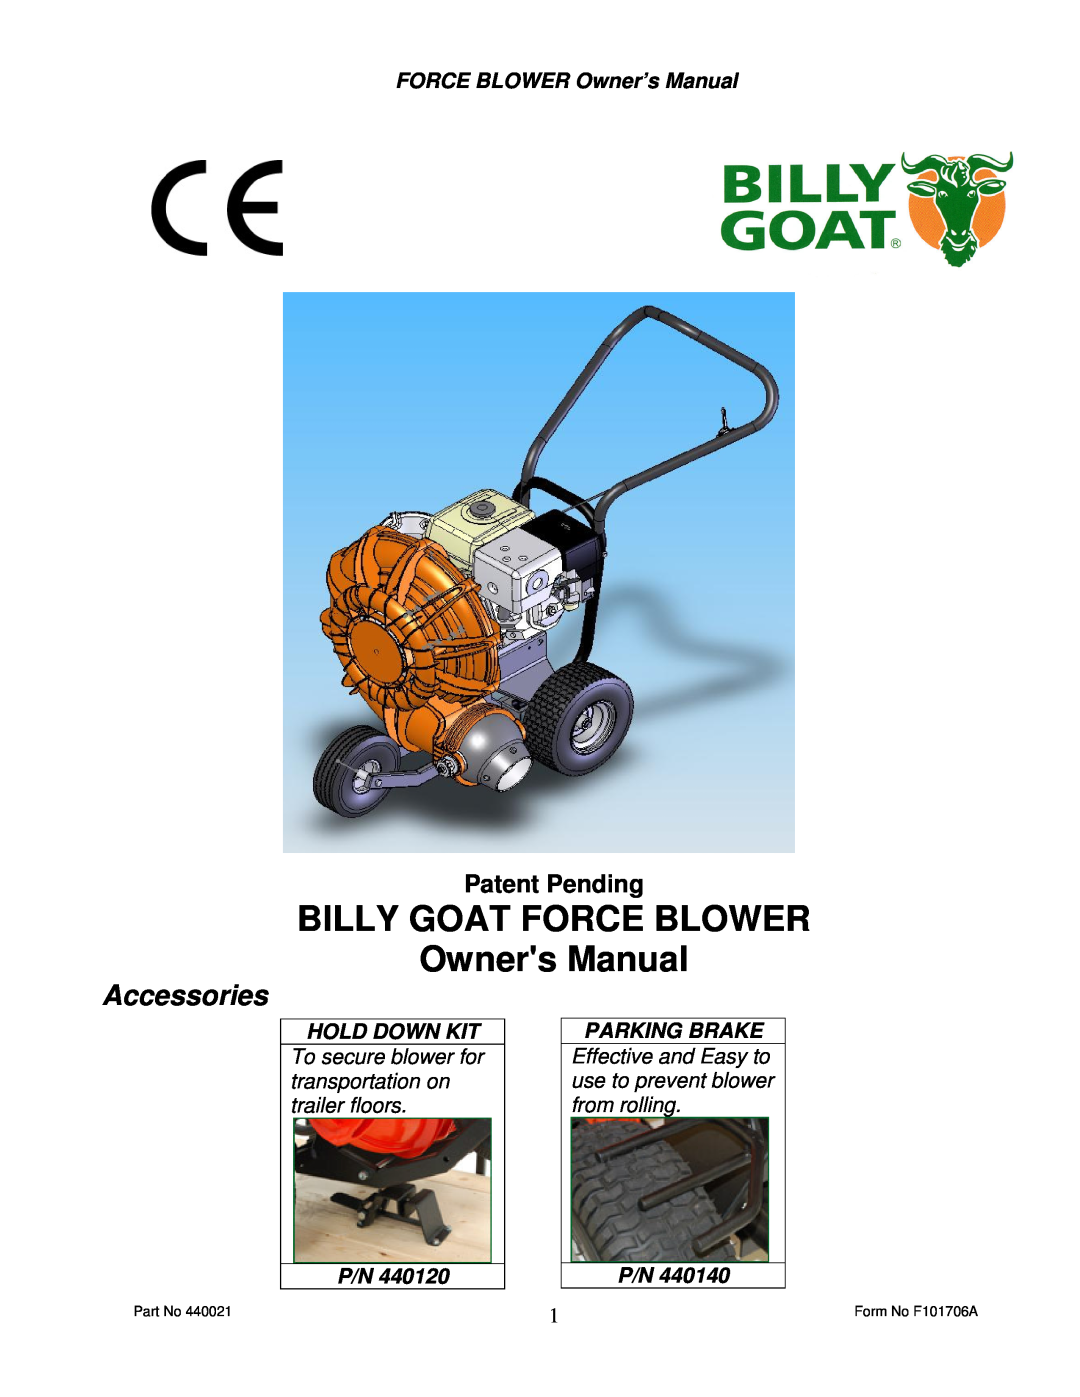 Billy Goat P / N 440140, P / N 440120 owner manual Patent Pending, Hold Down Kit, Parking Brake, Accessories 